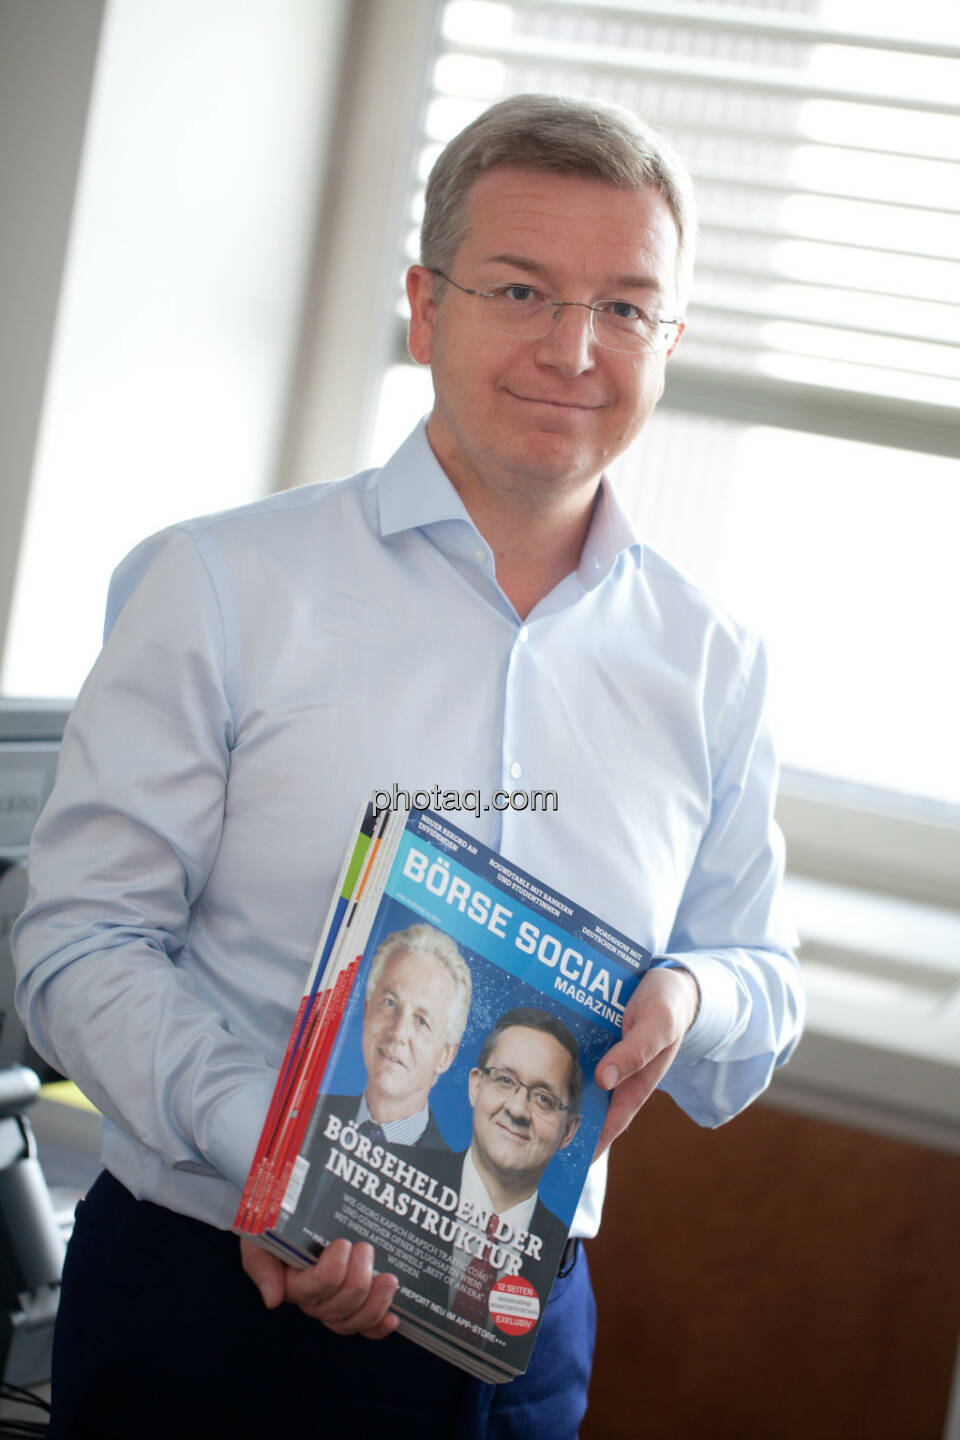 Michael Höllerer, Generalbevollmächtigter bei der RBI, mit dem Börse Social Magazine (Fotocredit: Michaela Metja/photaq.com) 